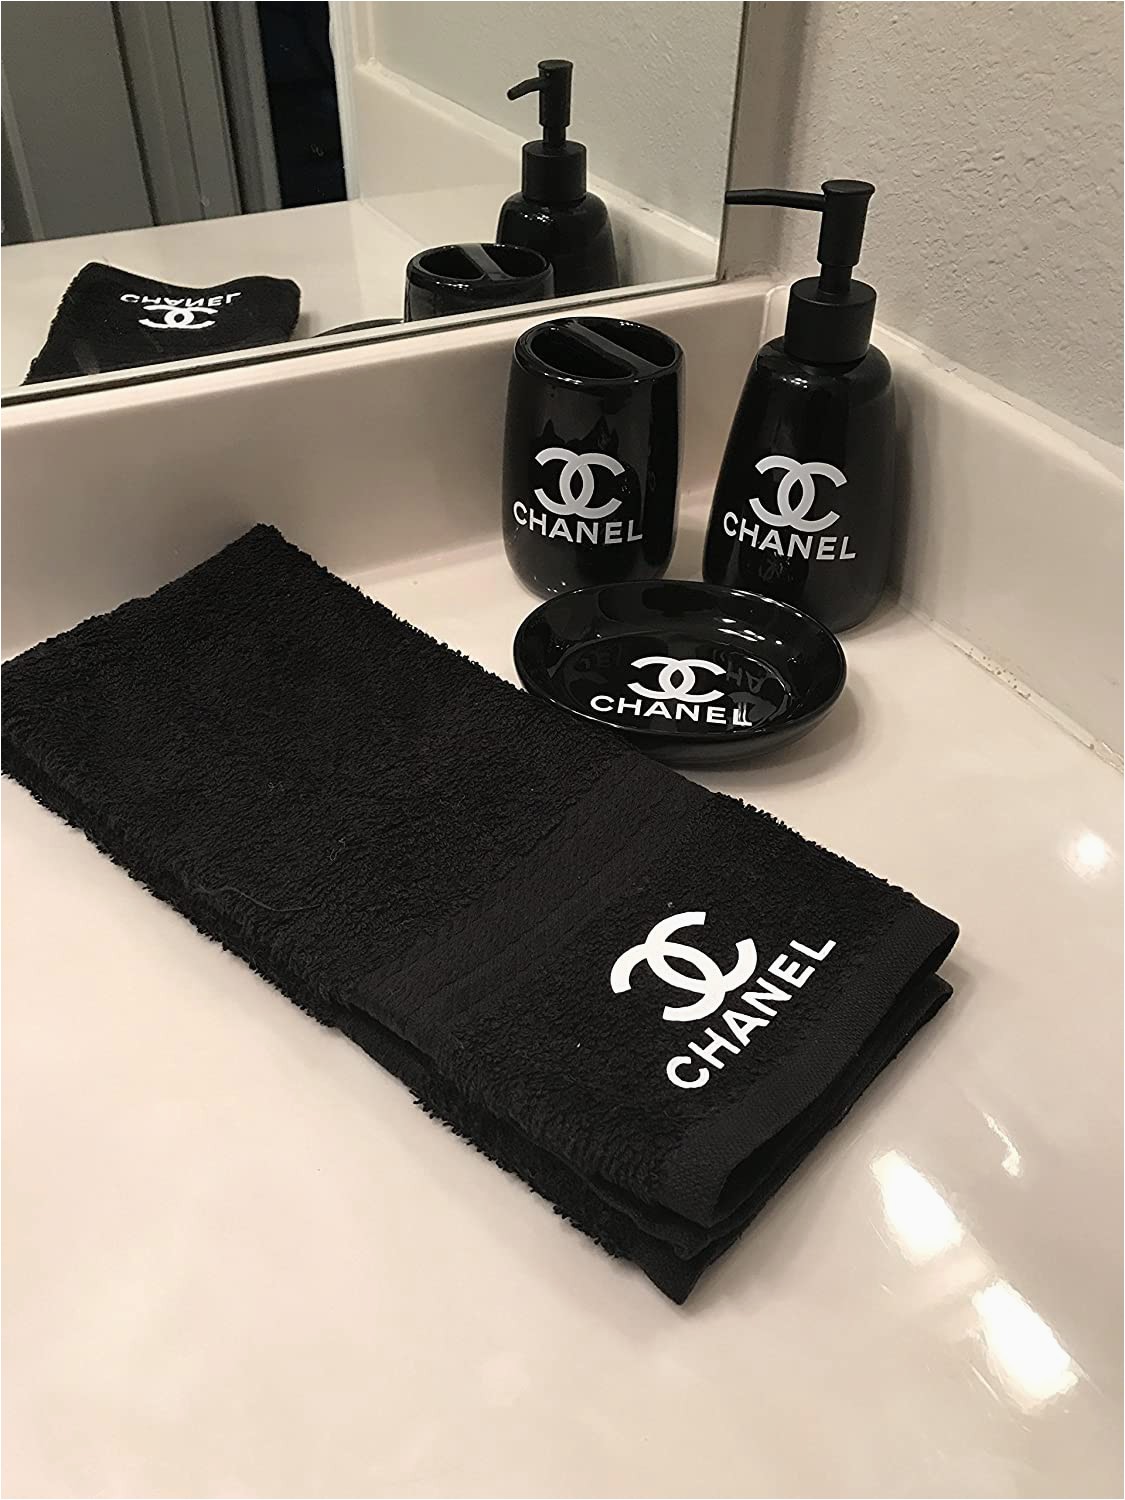 Chanel Bathroom Rug Set Cc Inspired Bathroom Accessories